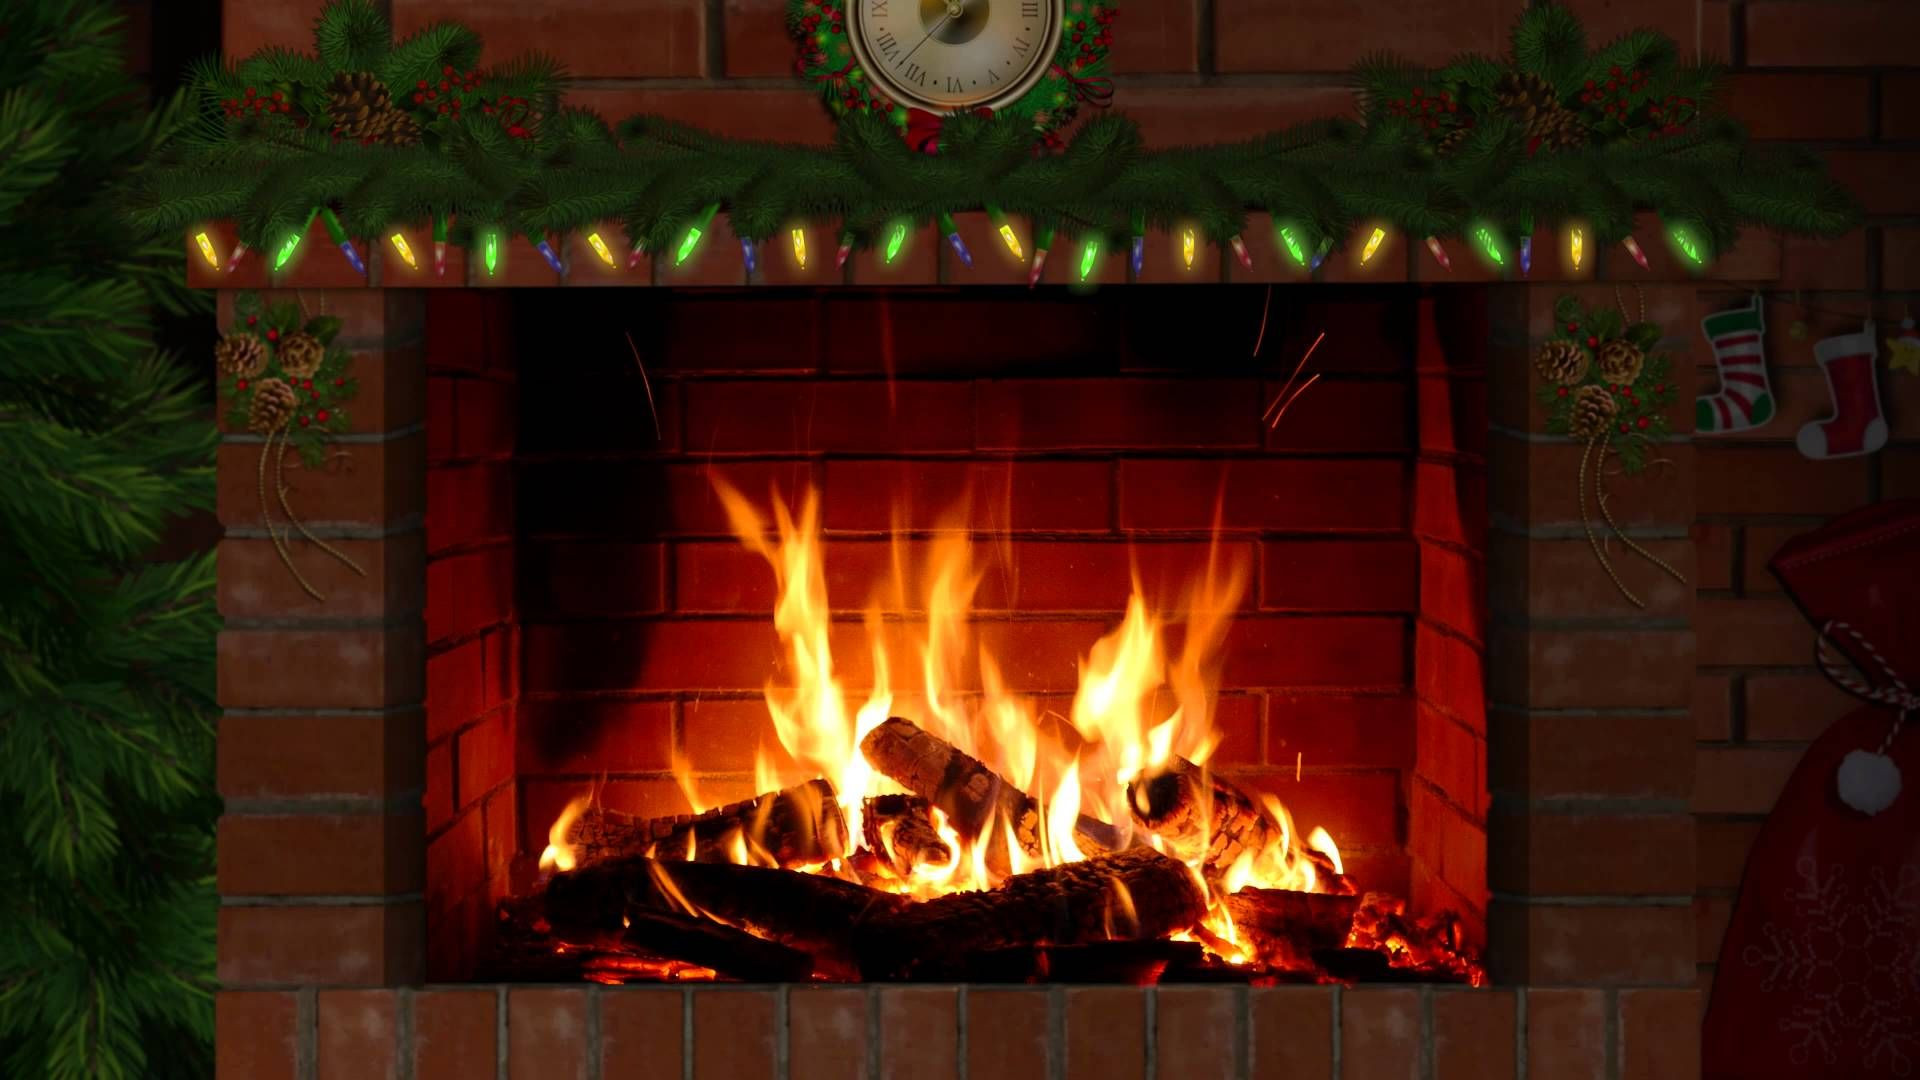 Fireplace Music Christmas
 Fireplace with Christmas music 3 hours Enjoy Christmas